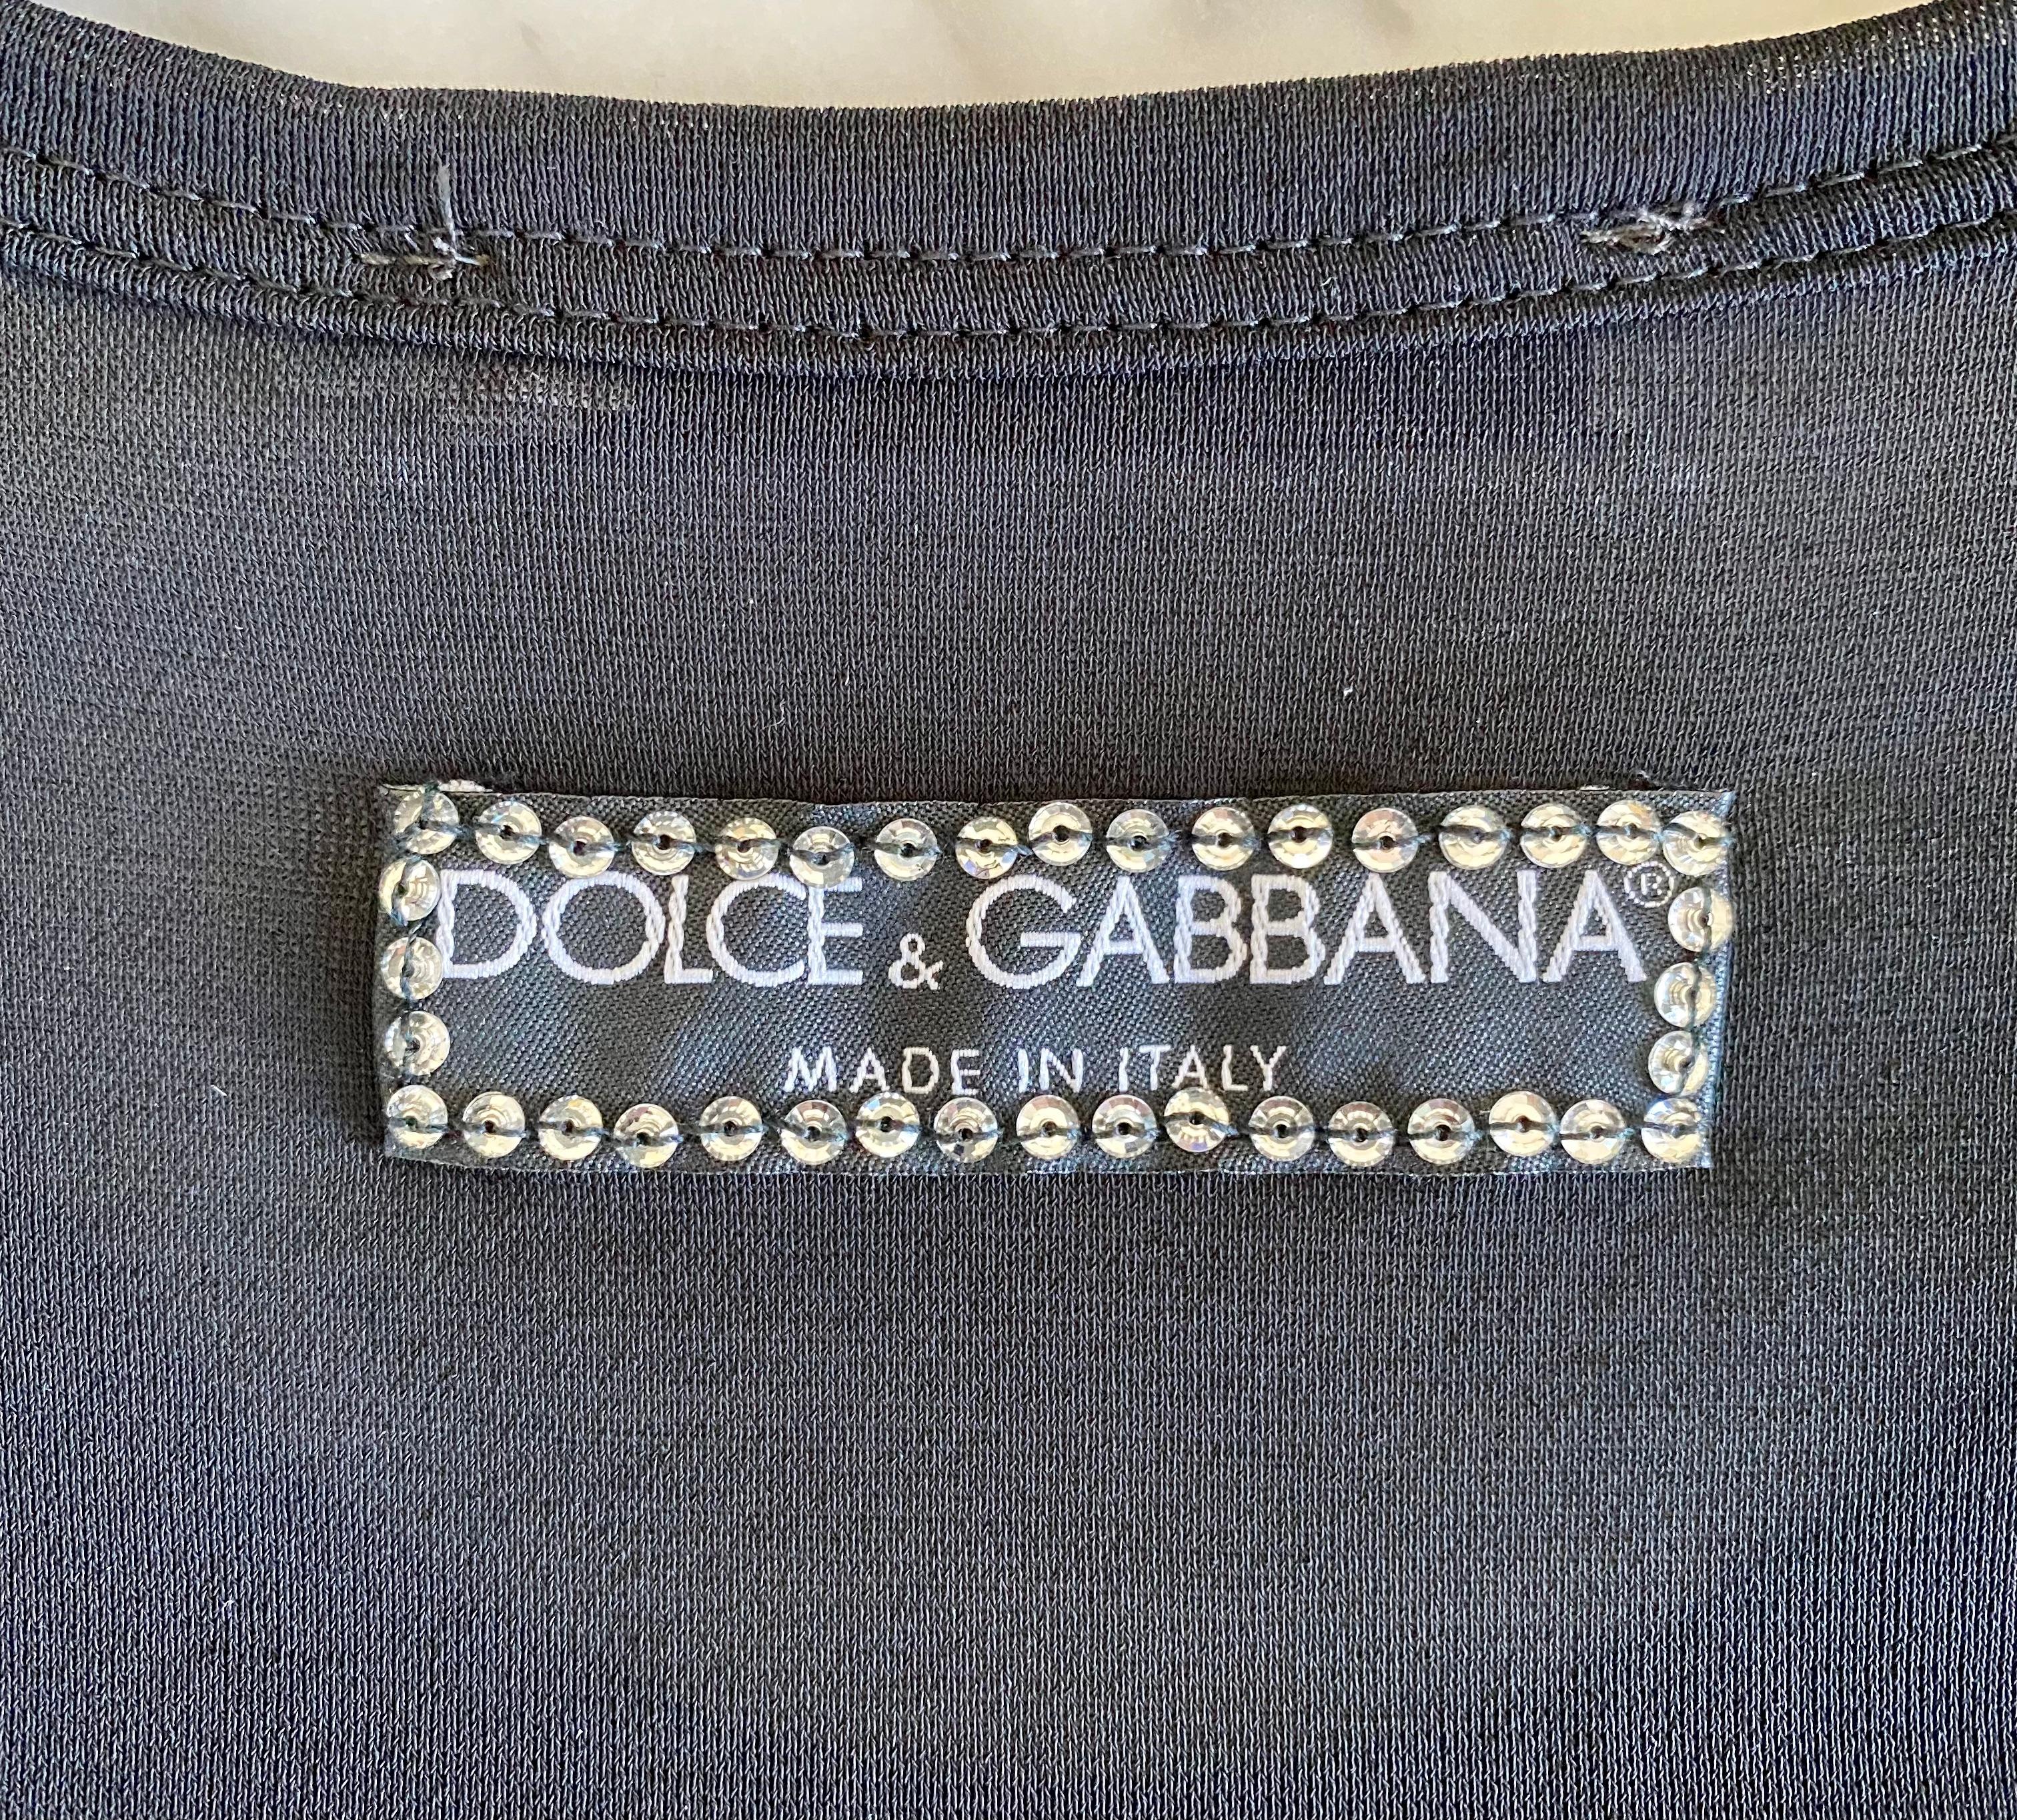 S/S 2001 Dolce and Gabbana Sheer and Rhinestone 